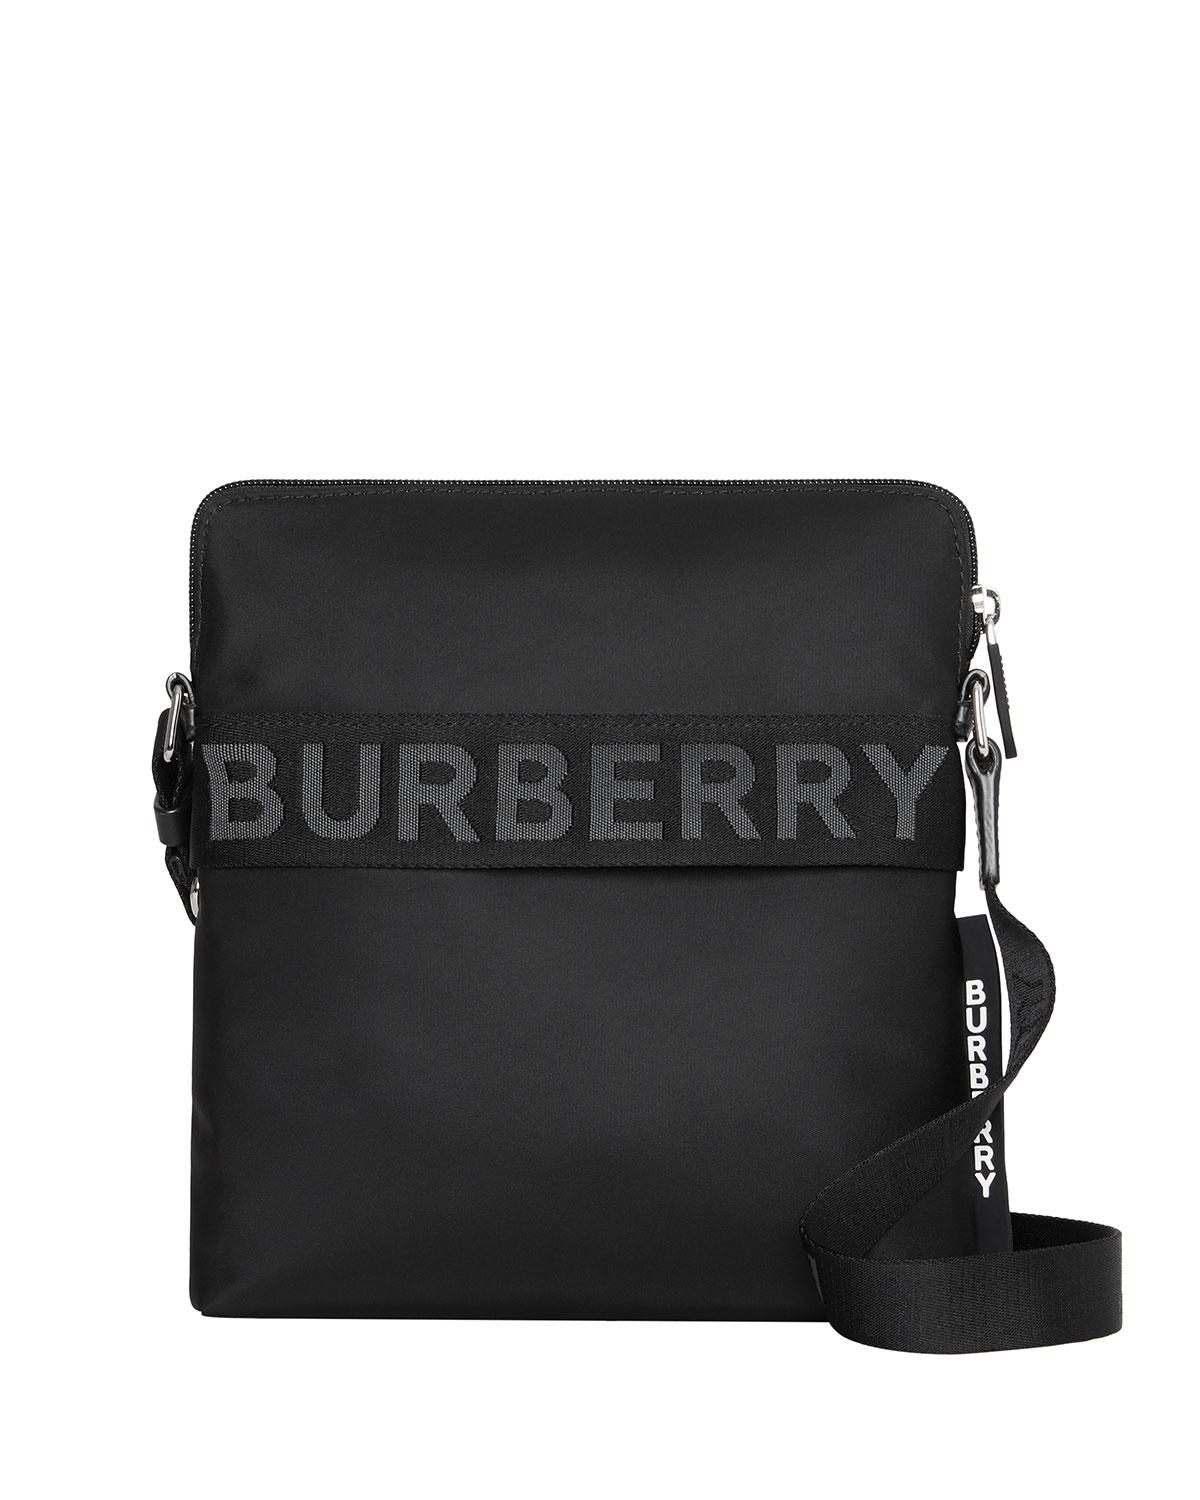 burberry nylon crossbody bag